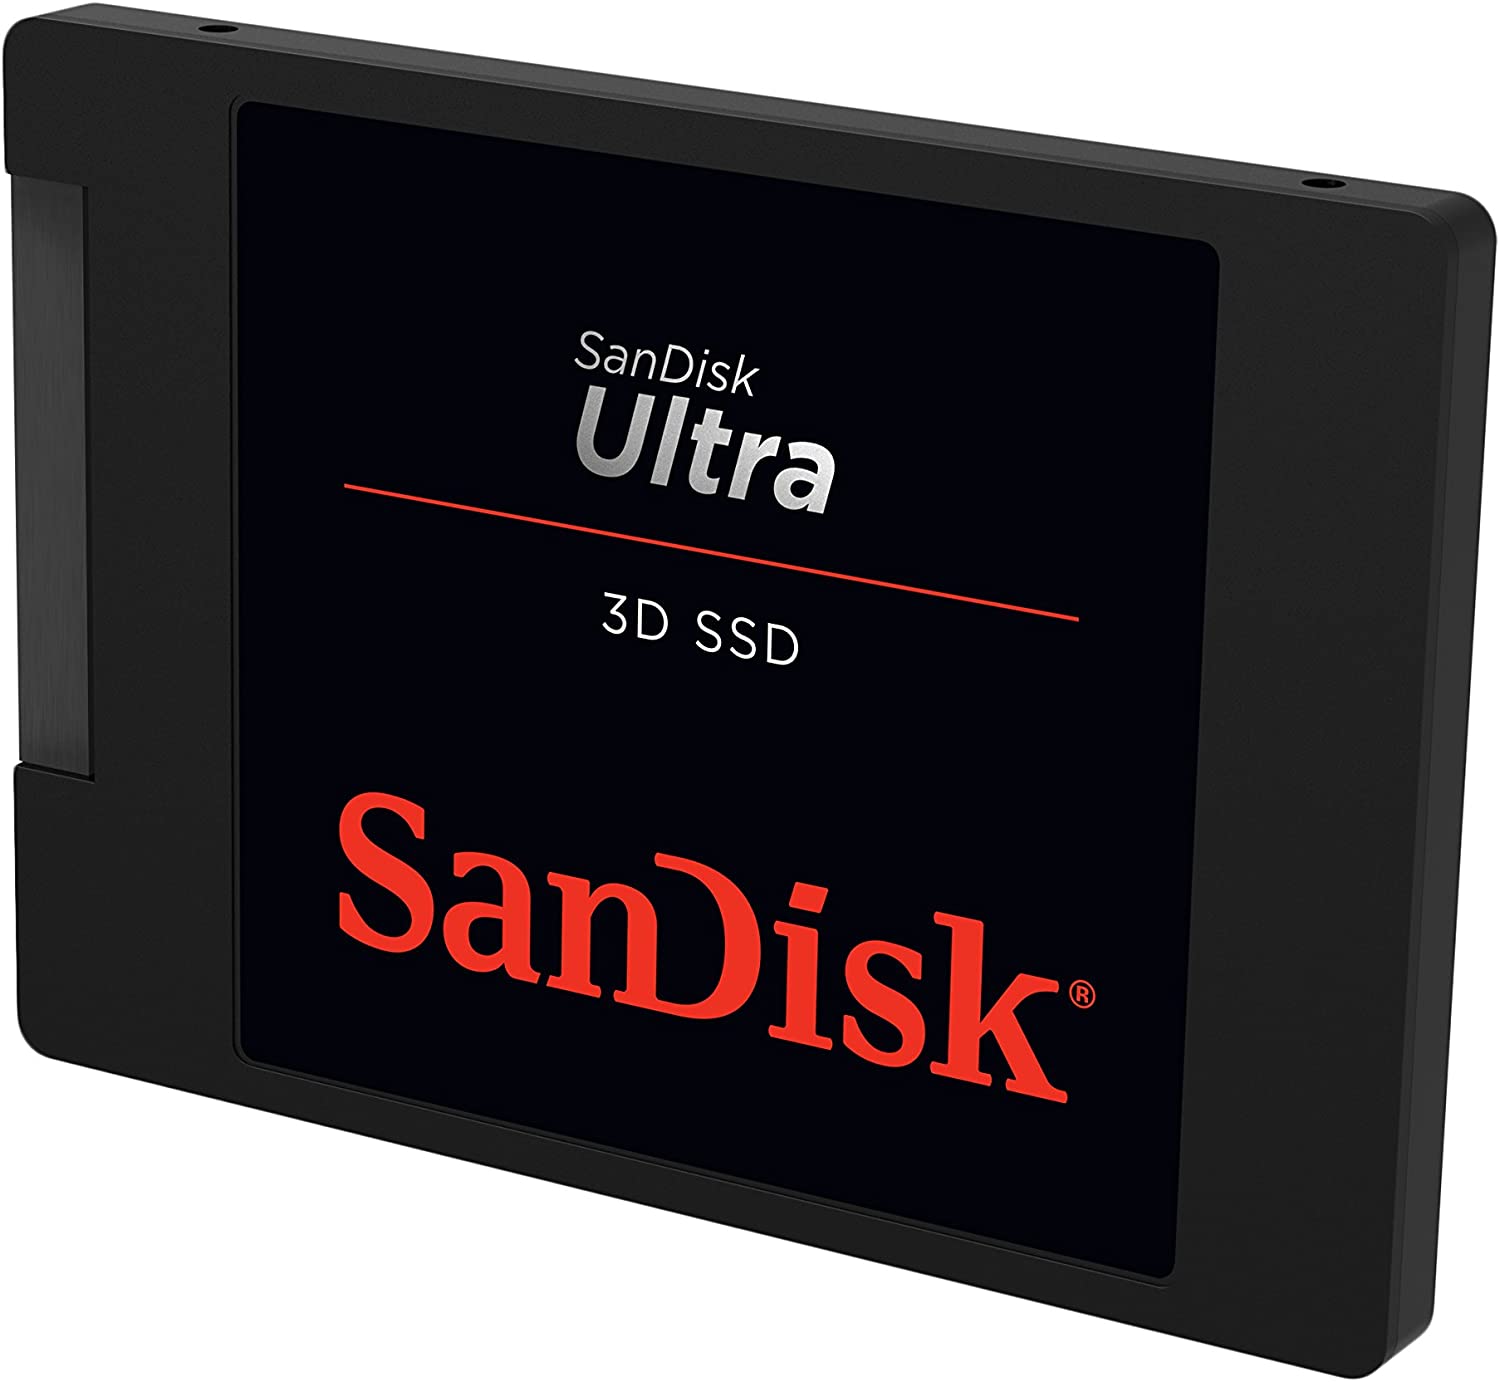 SanDisk Ultra 3D NAND 500GB Internal SSD – SATA III 6 Gb/s, 2.5 Inch /7 mm – Just $54.99 at Amazon